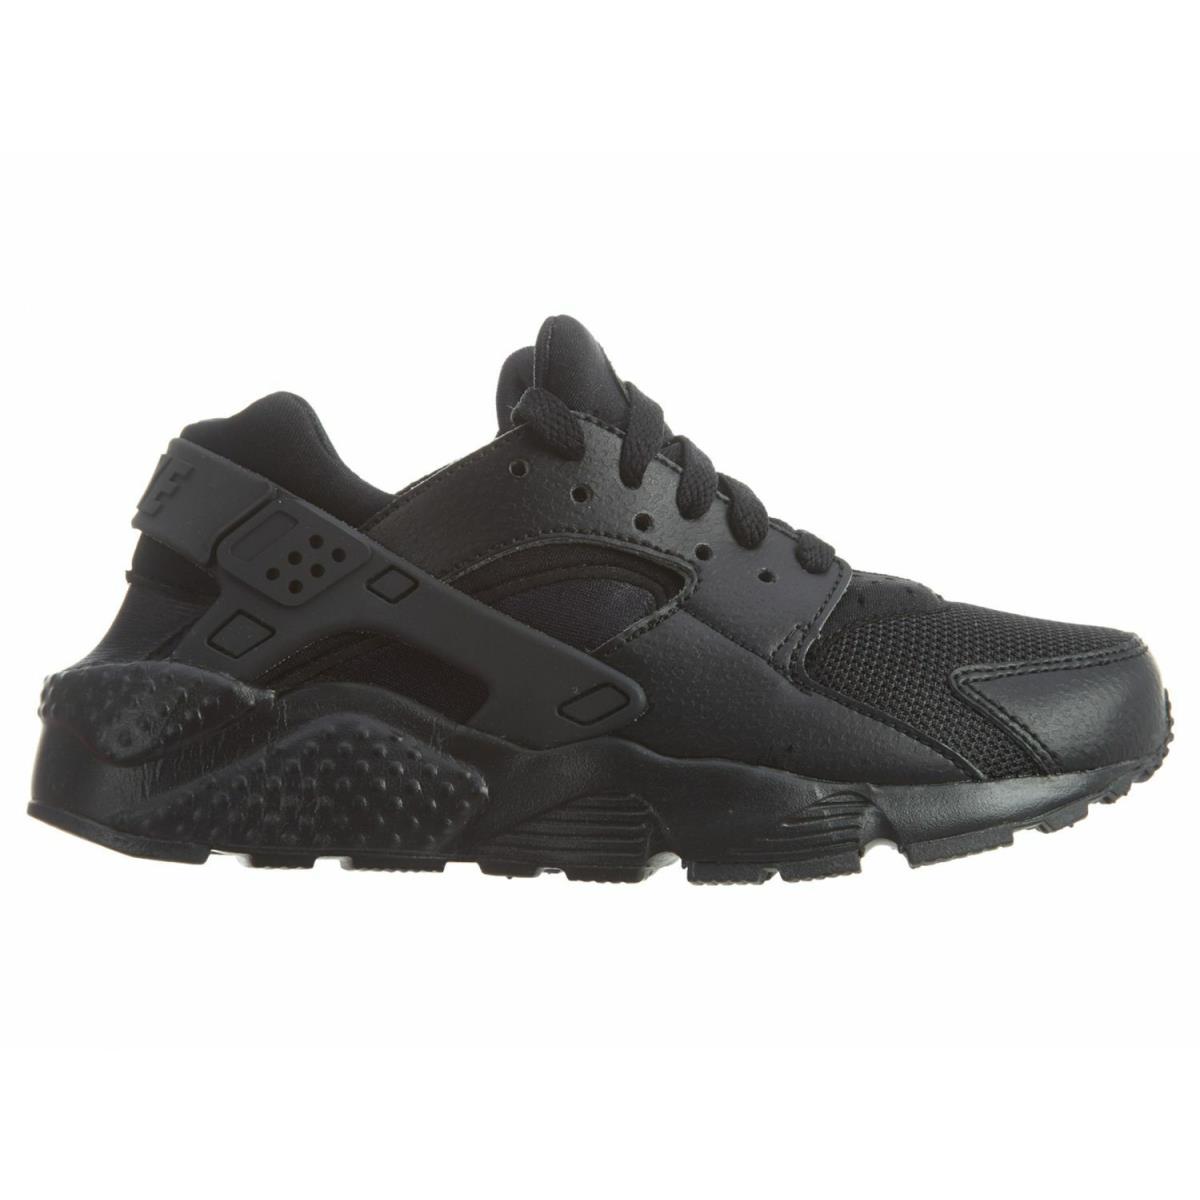 Nike Huarache Run Big Kids 654275-016 Triple Black Running Shoes Youth Size 5.5